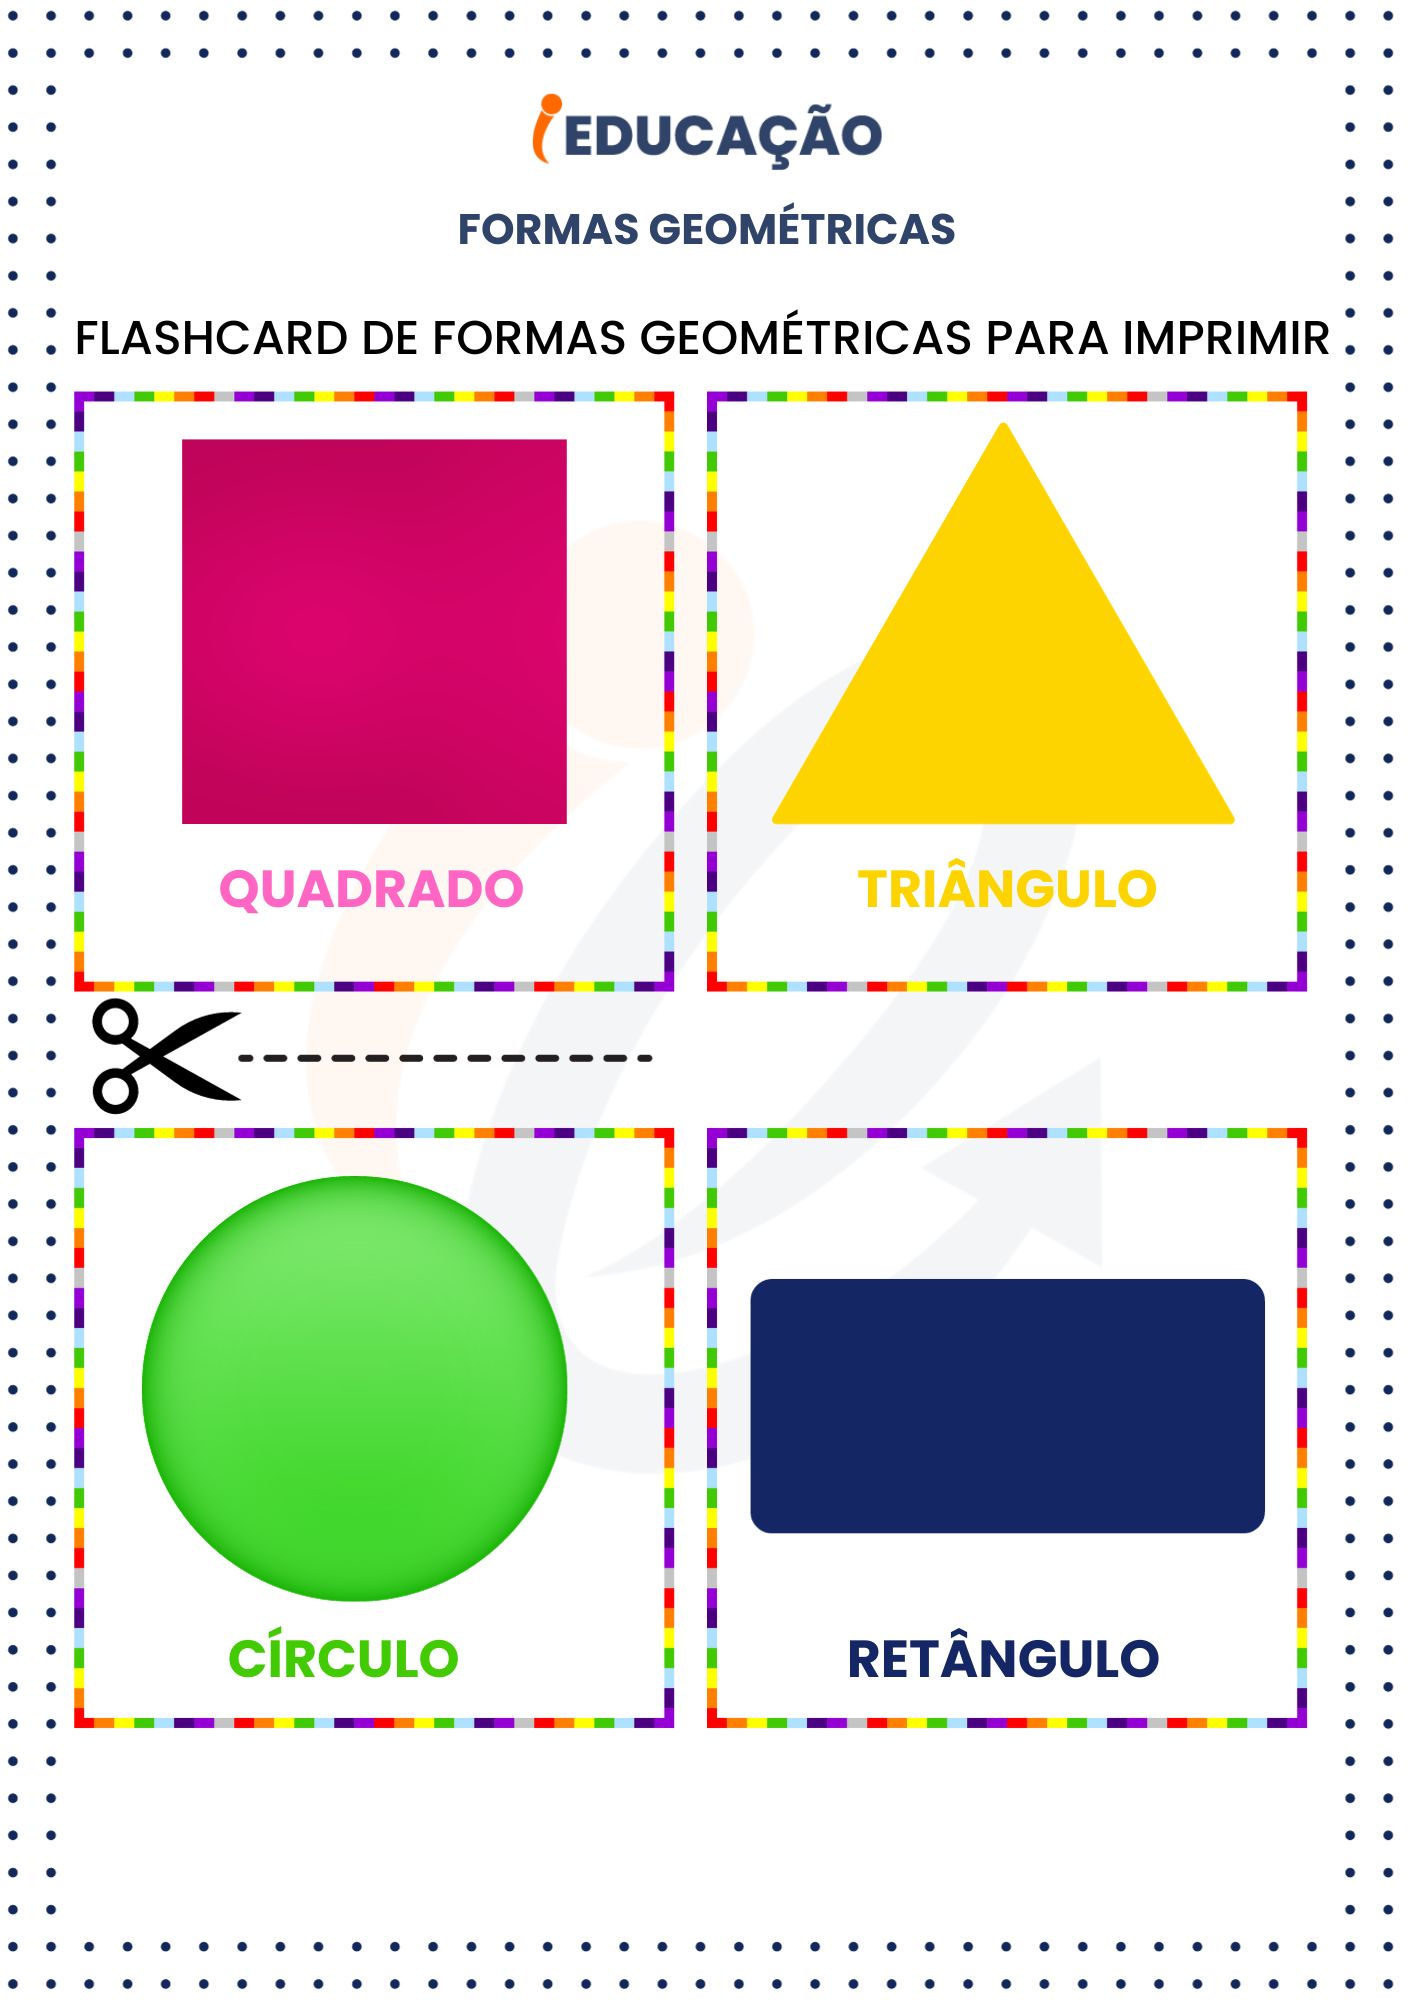 Atividade formas geométricas_ Flashcard de formas geométricas para imprimir.
